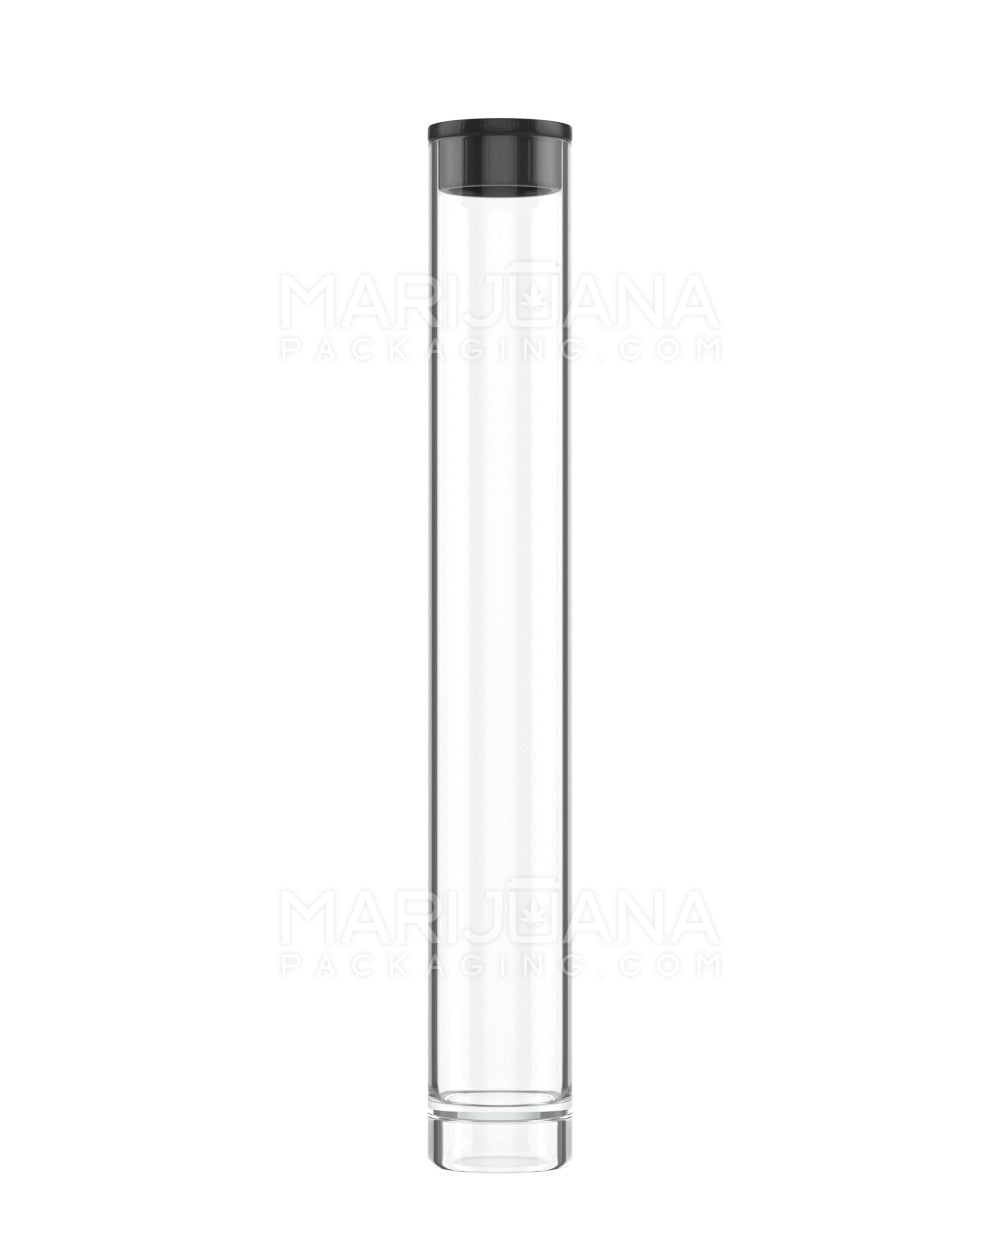 Buttonless Vape Cartridge Tube w/ Black Cap | 86mm - Clear Plastic - 500 Count - 1